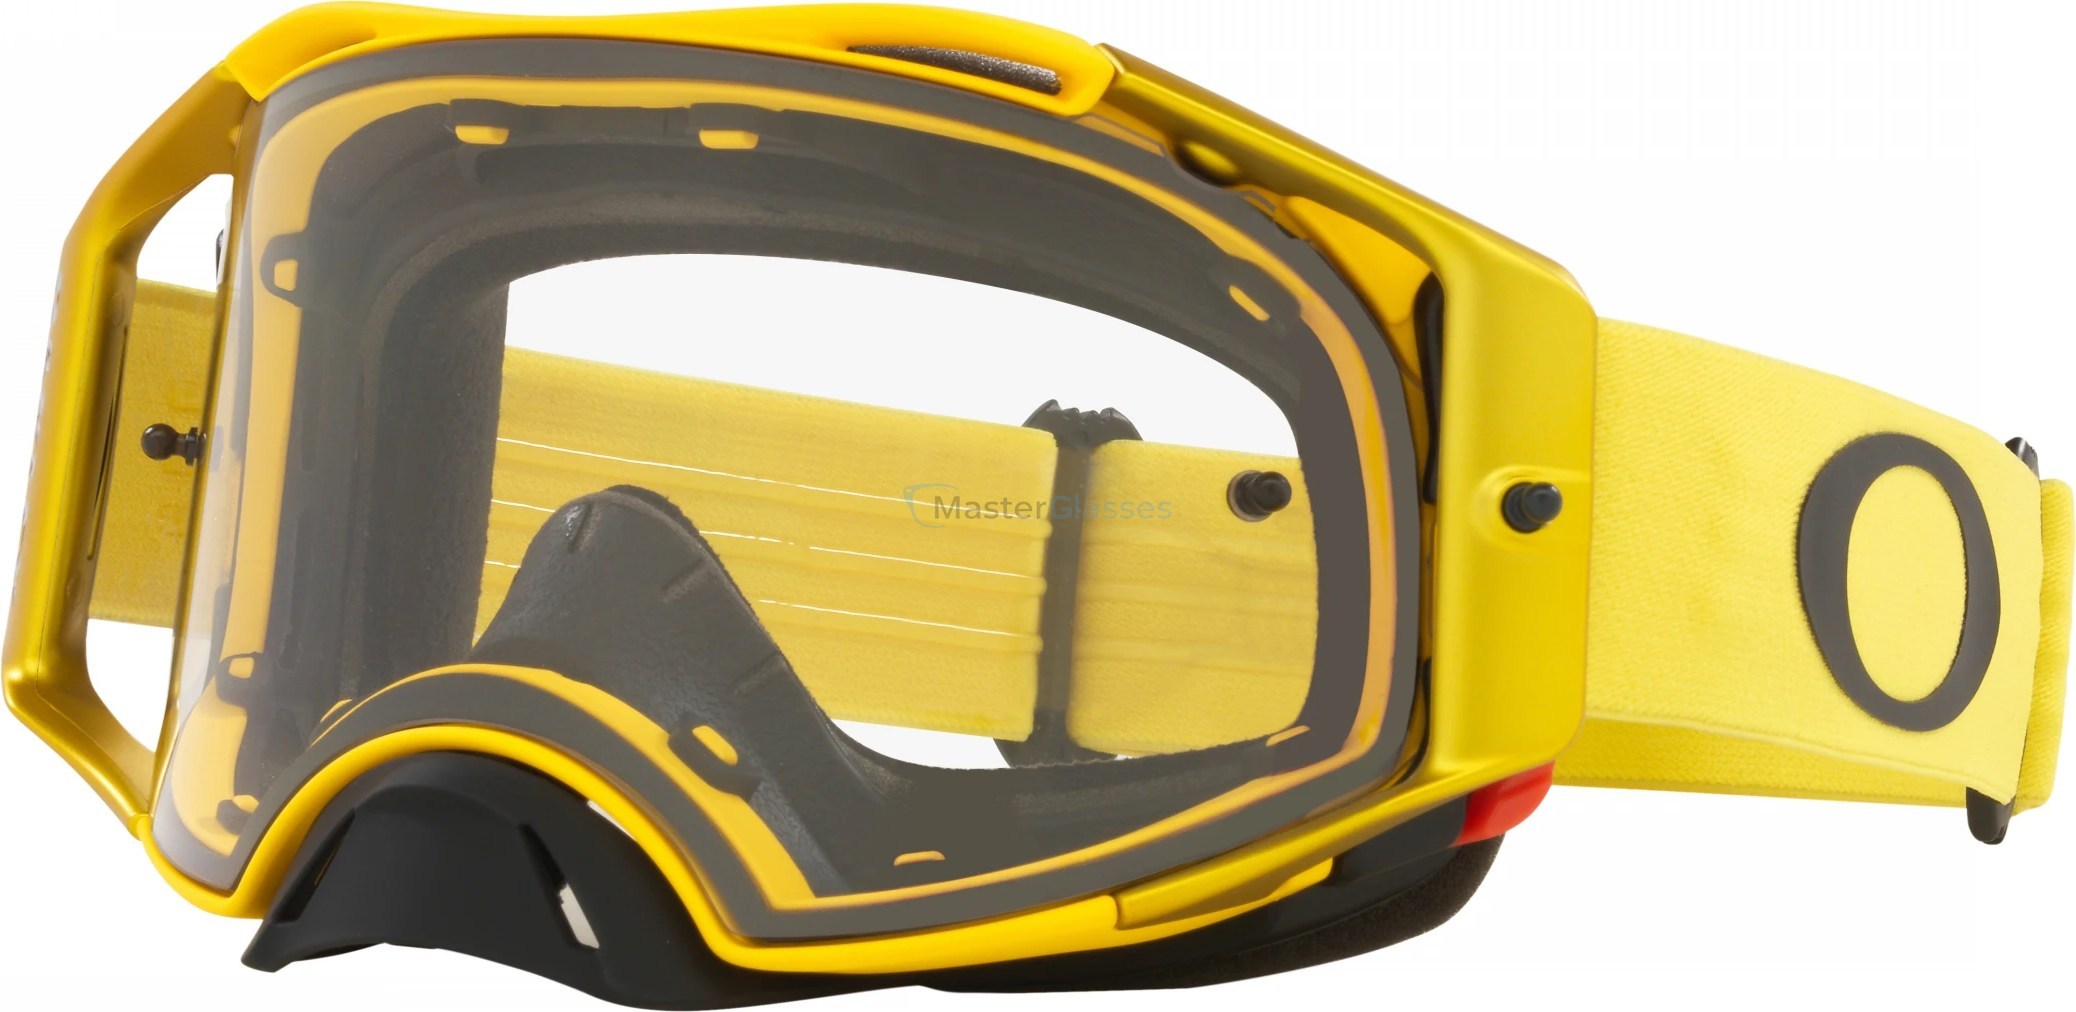    Oakley mx goggles Airbrake Mx OO7046 7046B5 Moto Yellow